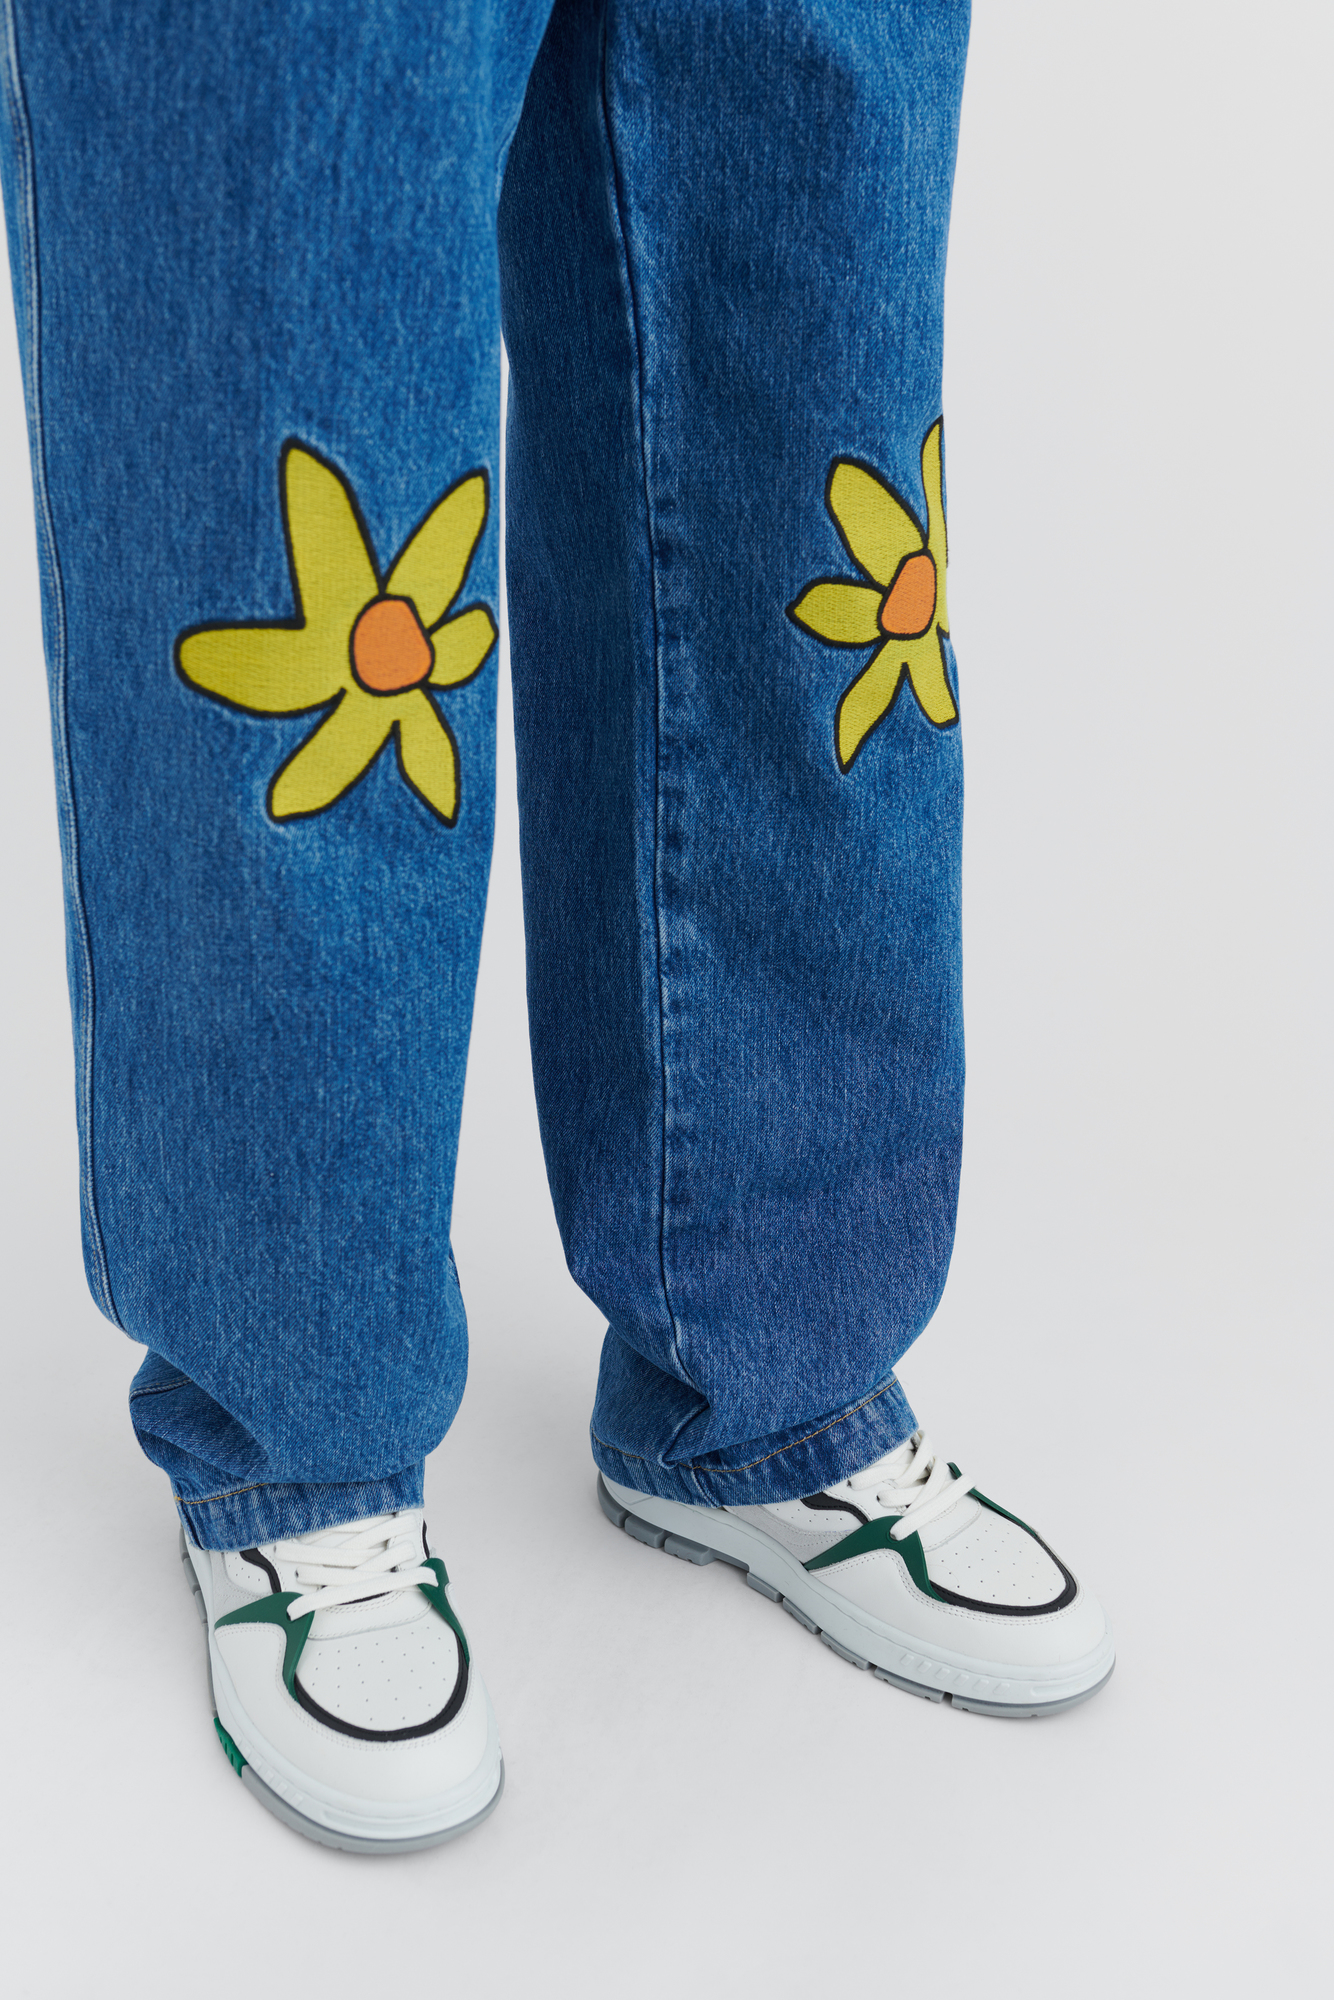 Bloom Arcade Denim Trousers